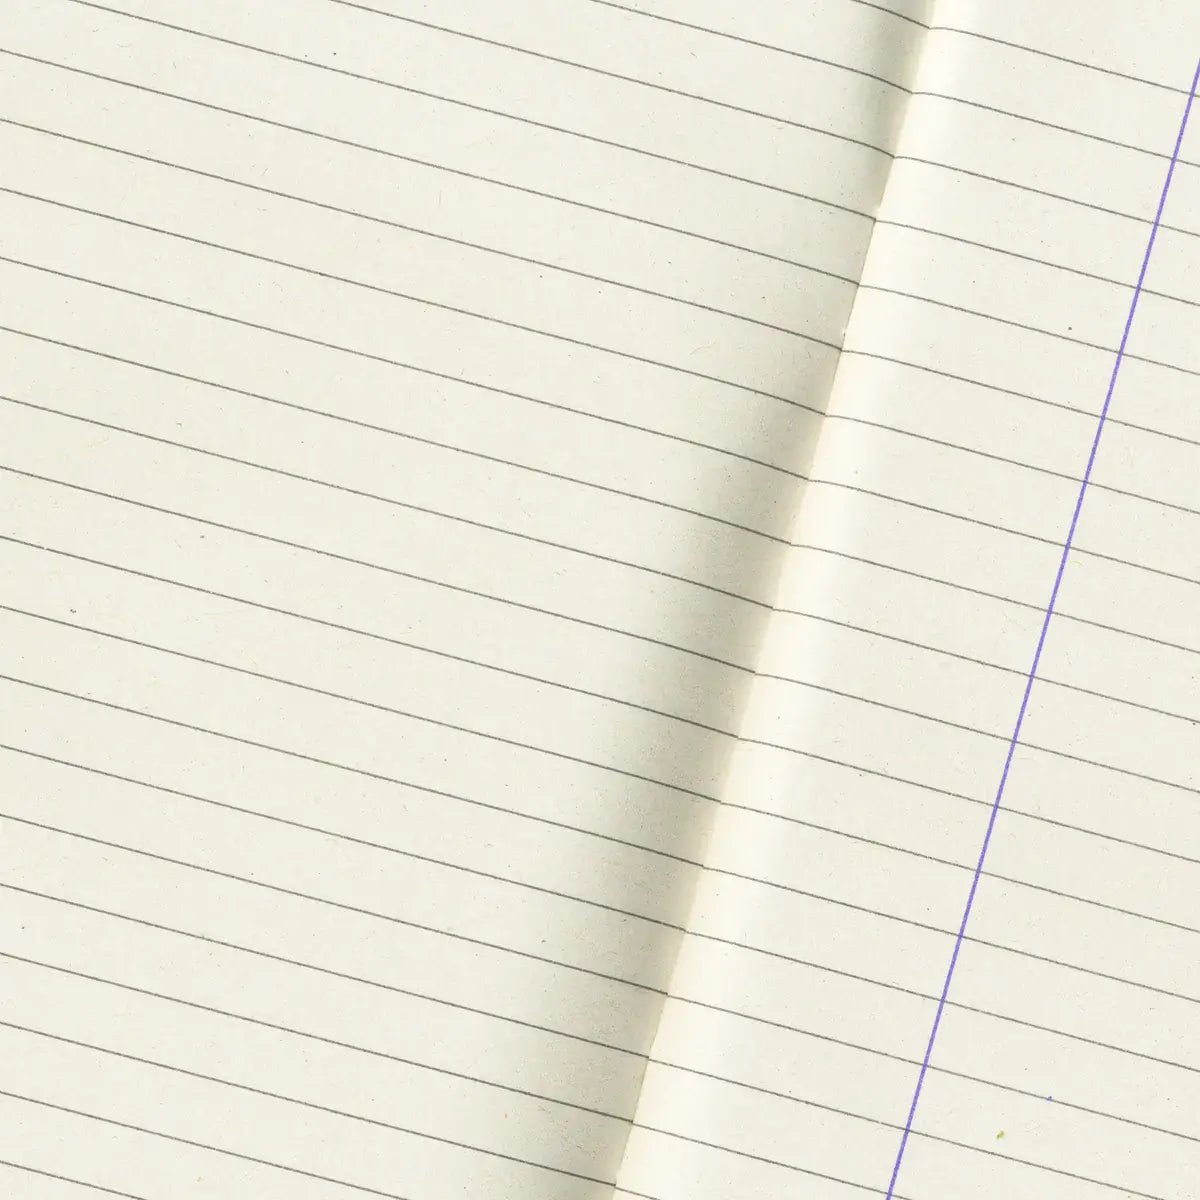 Quaderno No. 4 - Ruled Lines Notebook